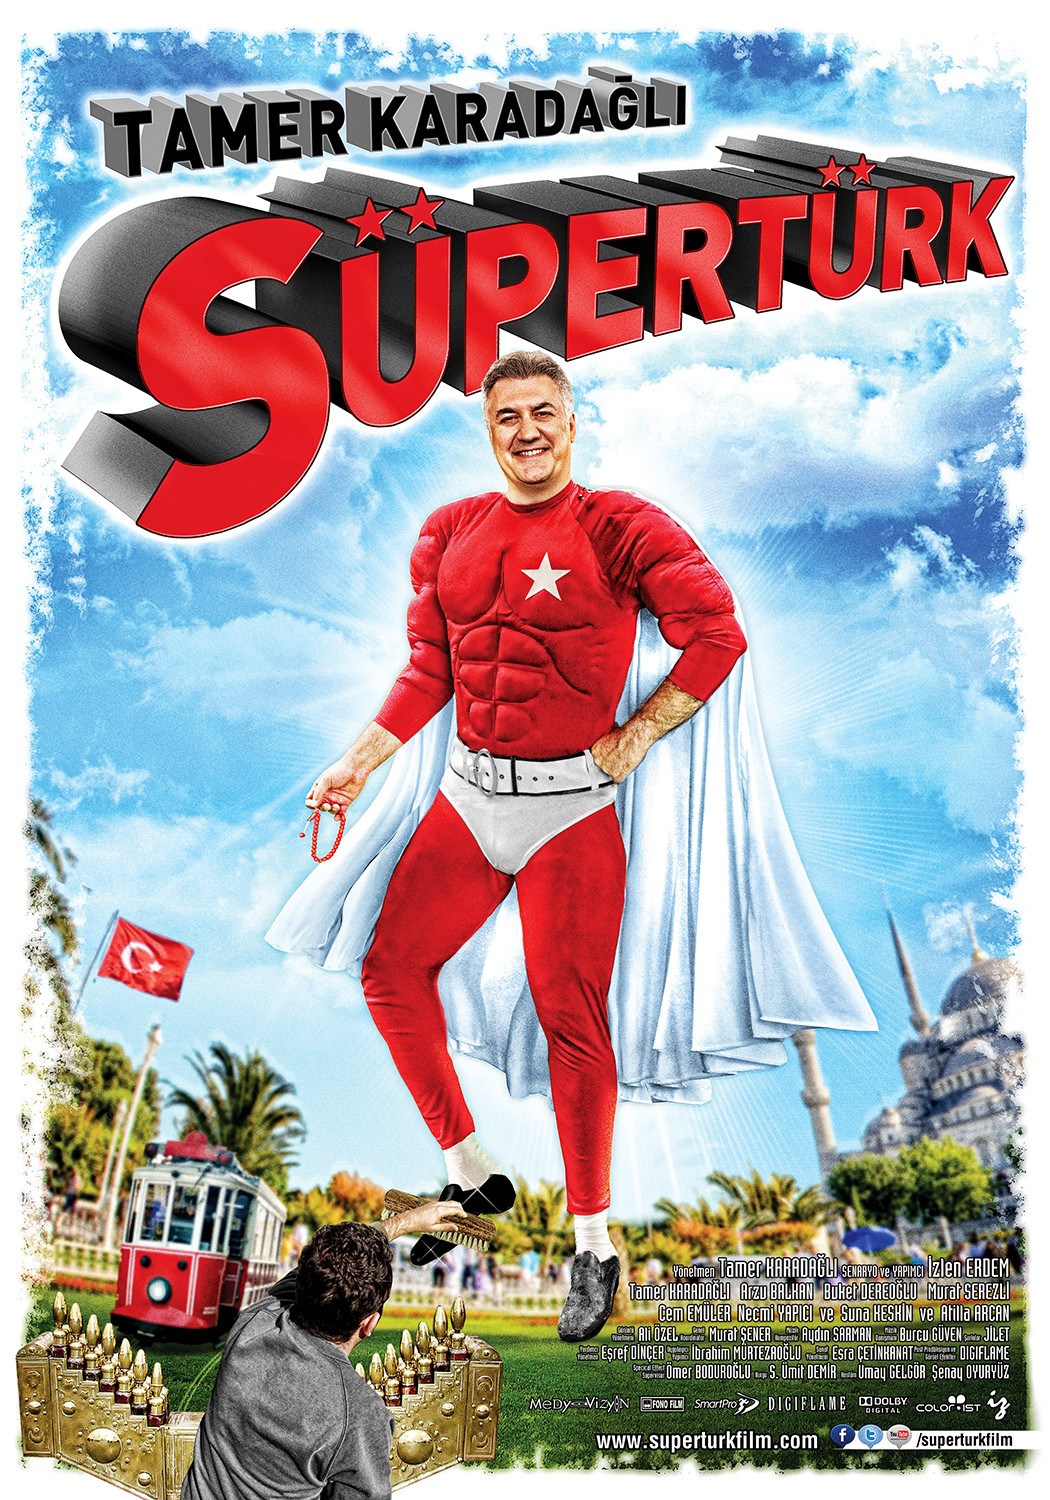 Extra Large Movie Poster Image for SüperTürk 